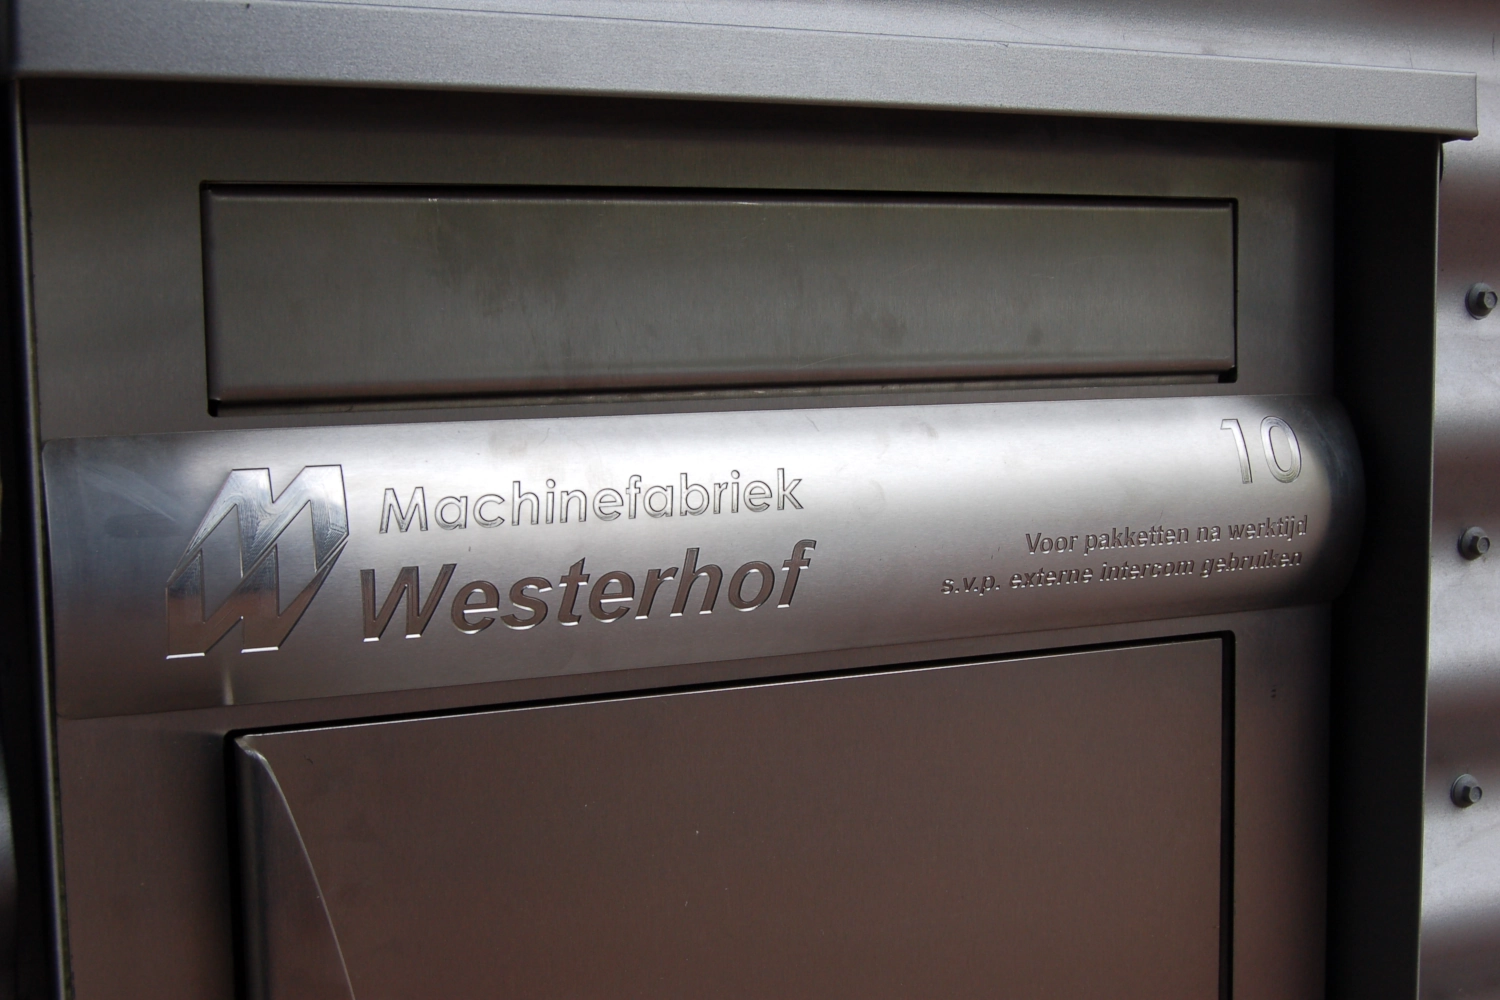 Mailbox - Parallelweg 10 - Business premises - Gallery - Machine factory Westerhof